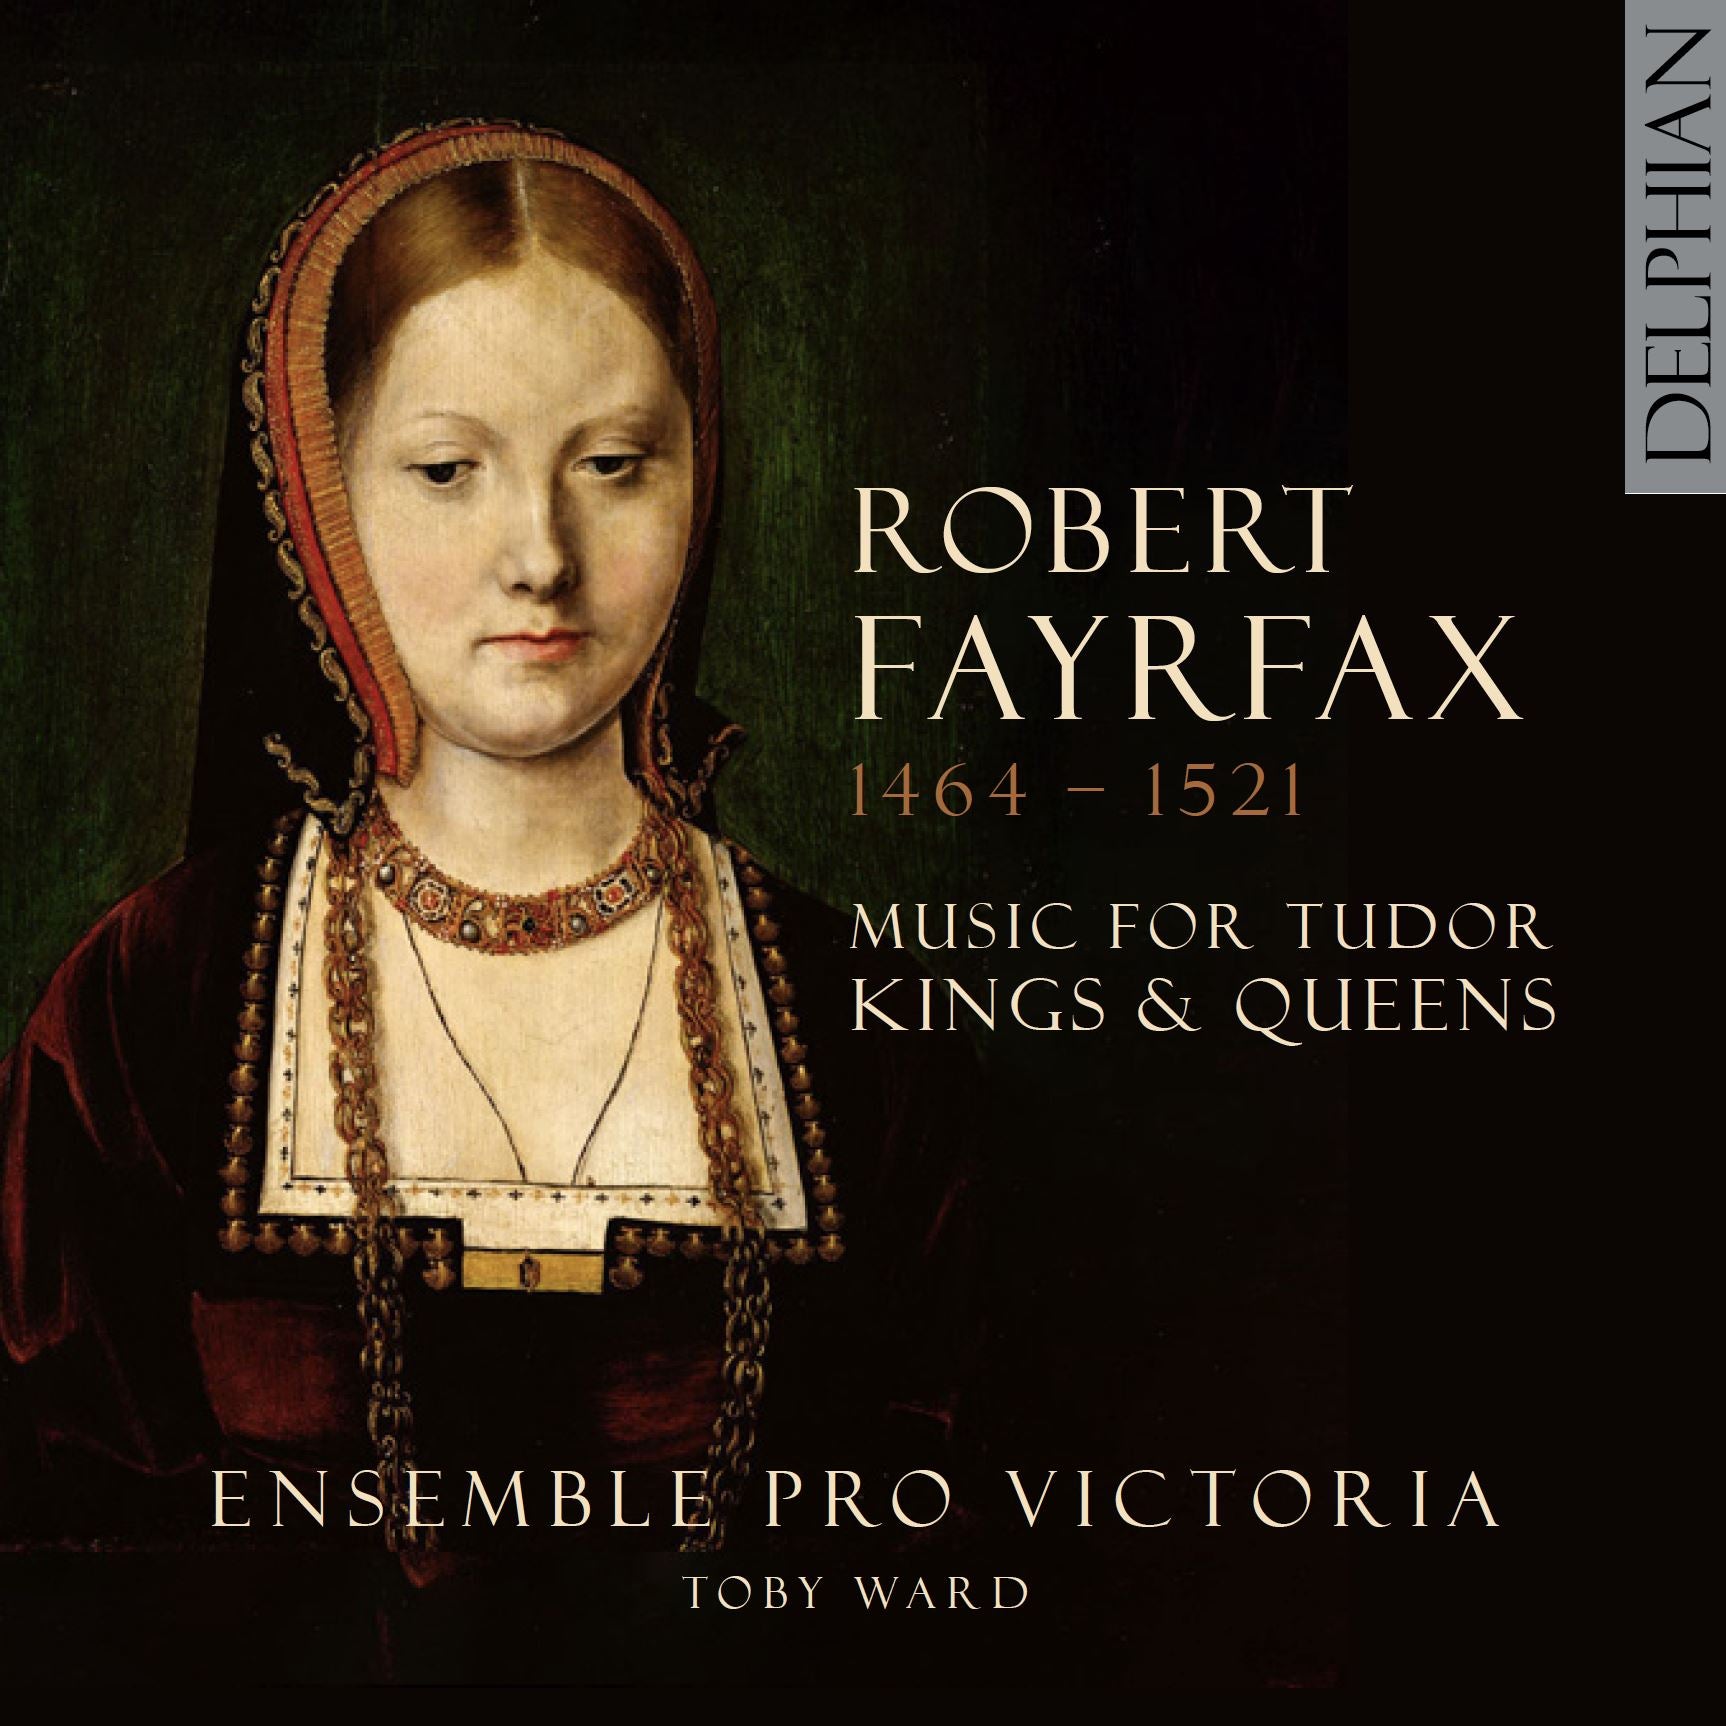 Robert Fayrfax (1464 - 1521): Music for Tudor Kings & Queens